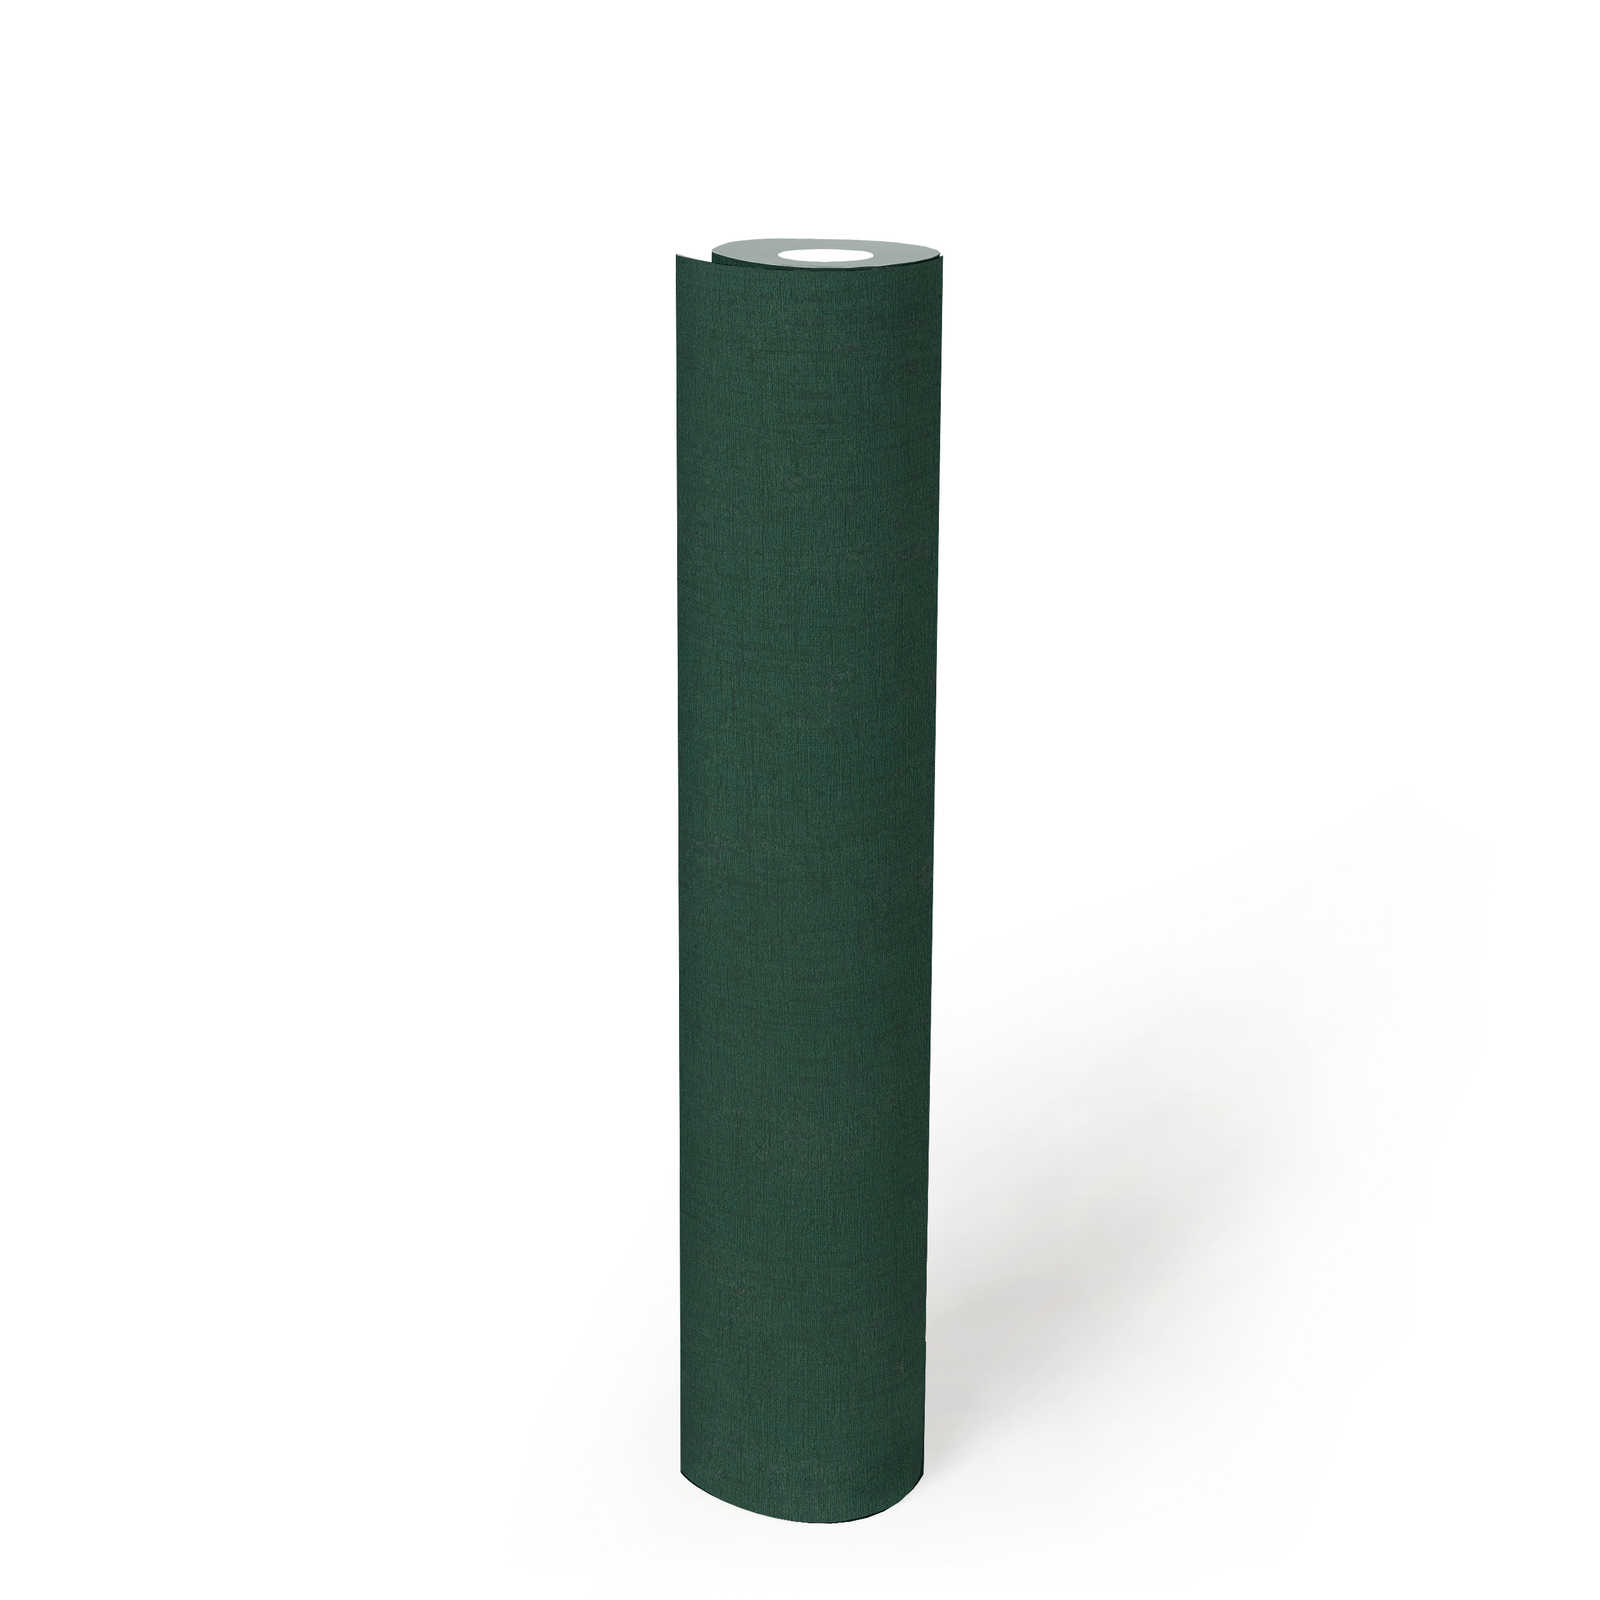             Papel pintado no tejido monocolor de textura ligera - verde, verde oscuro
        